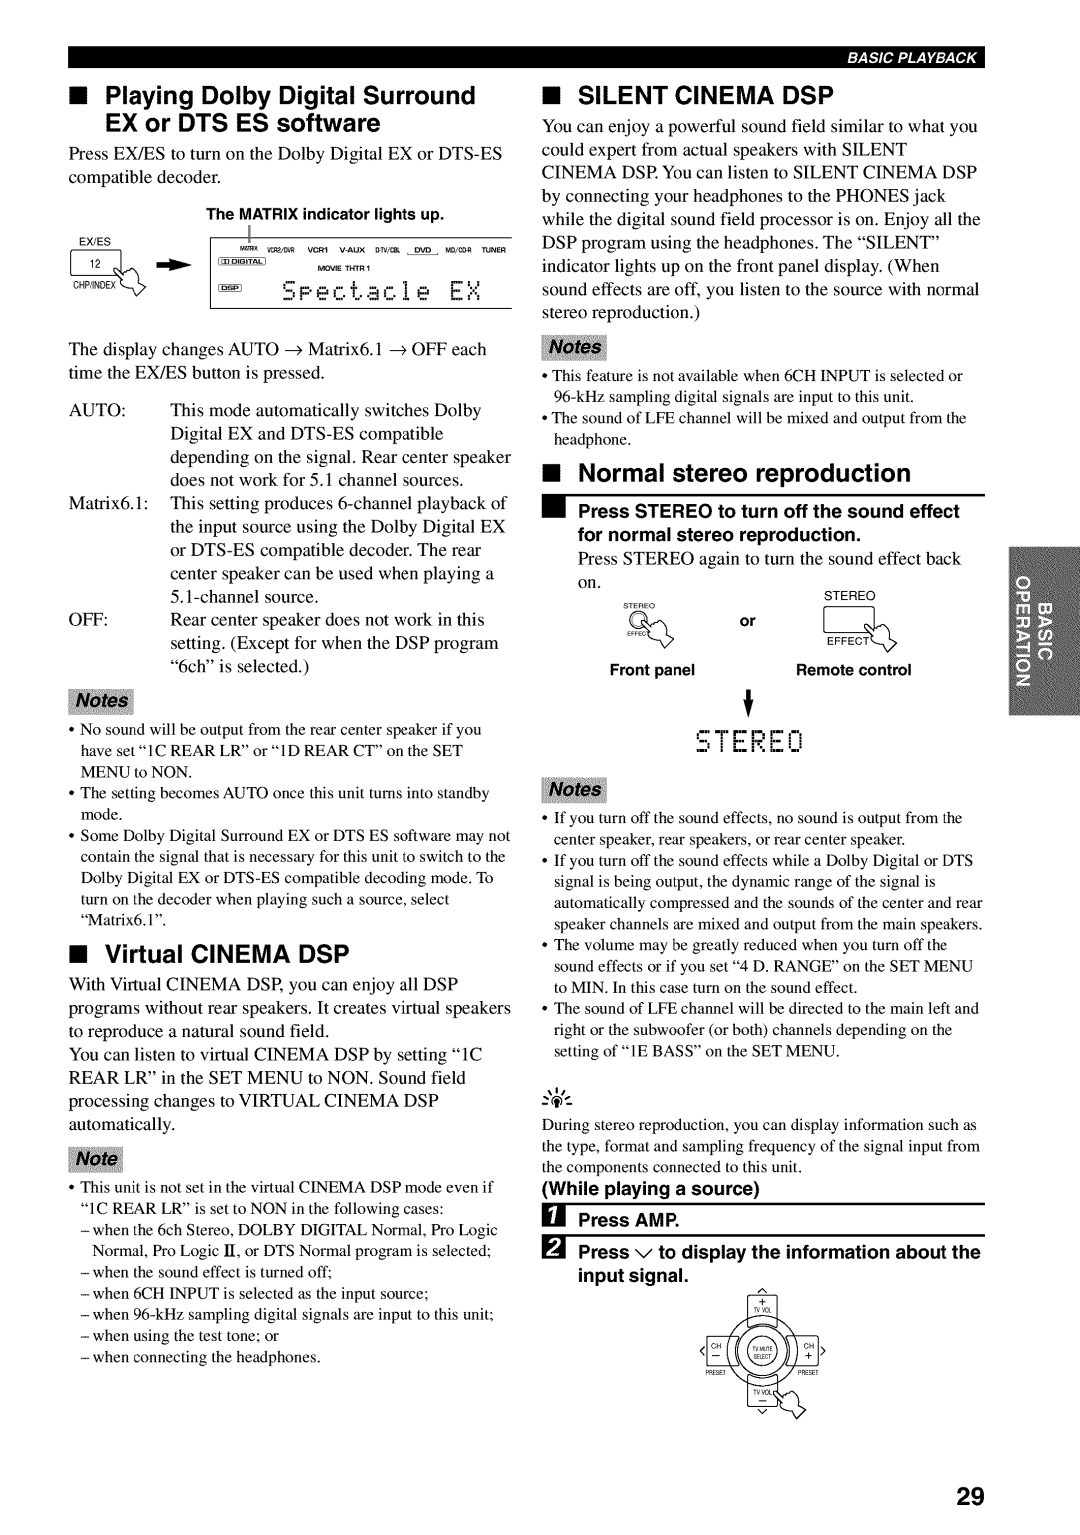 Yamaha RX-V730 owner manual ii;r E E0, •Virtual CINEMA DSP, •Silent Cinema Dsp, •Normal stereo reproduction 